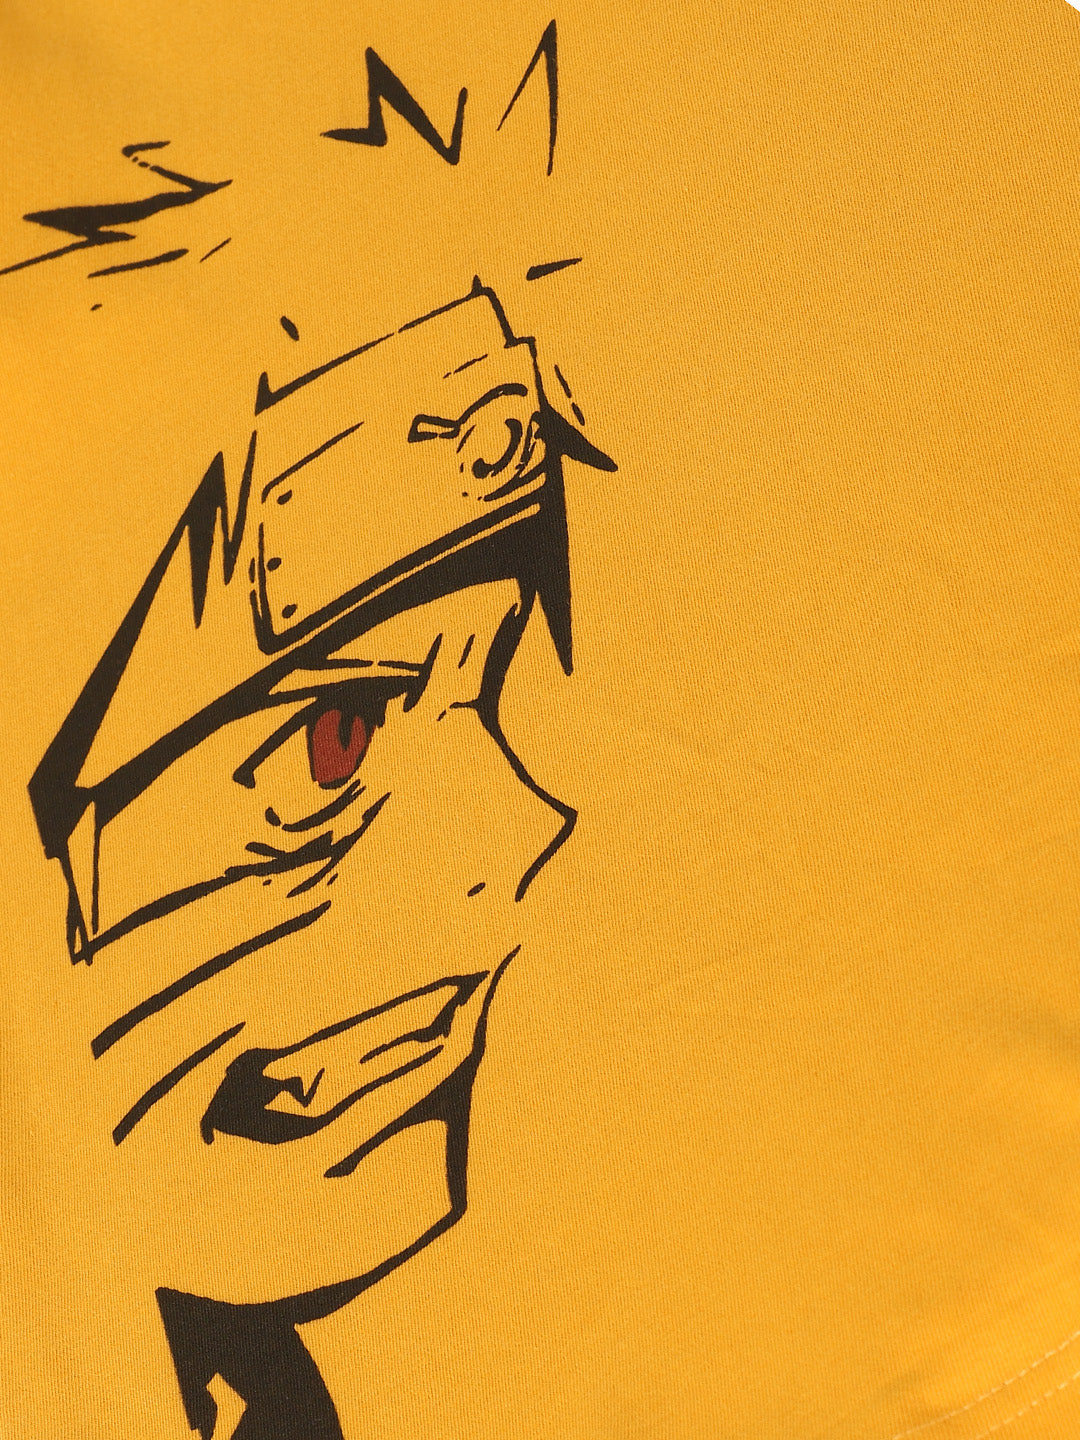 Naruto Uzumaki Shippuden Anime T-Shirt Graphic T-Shirts Bushirt   